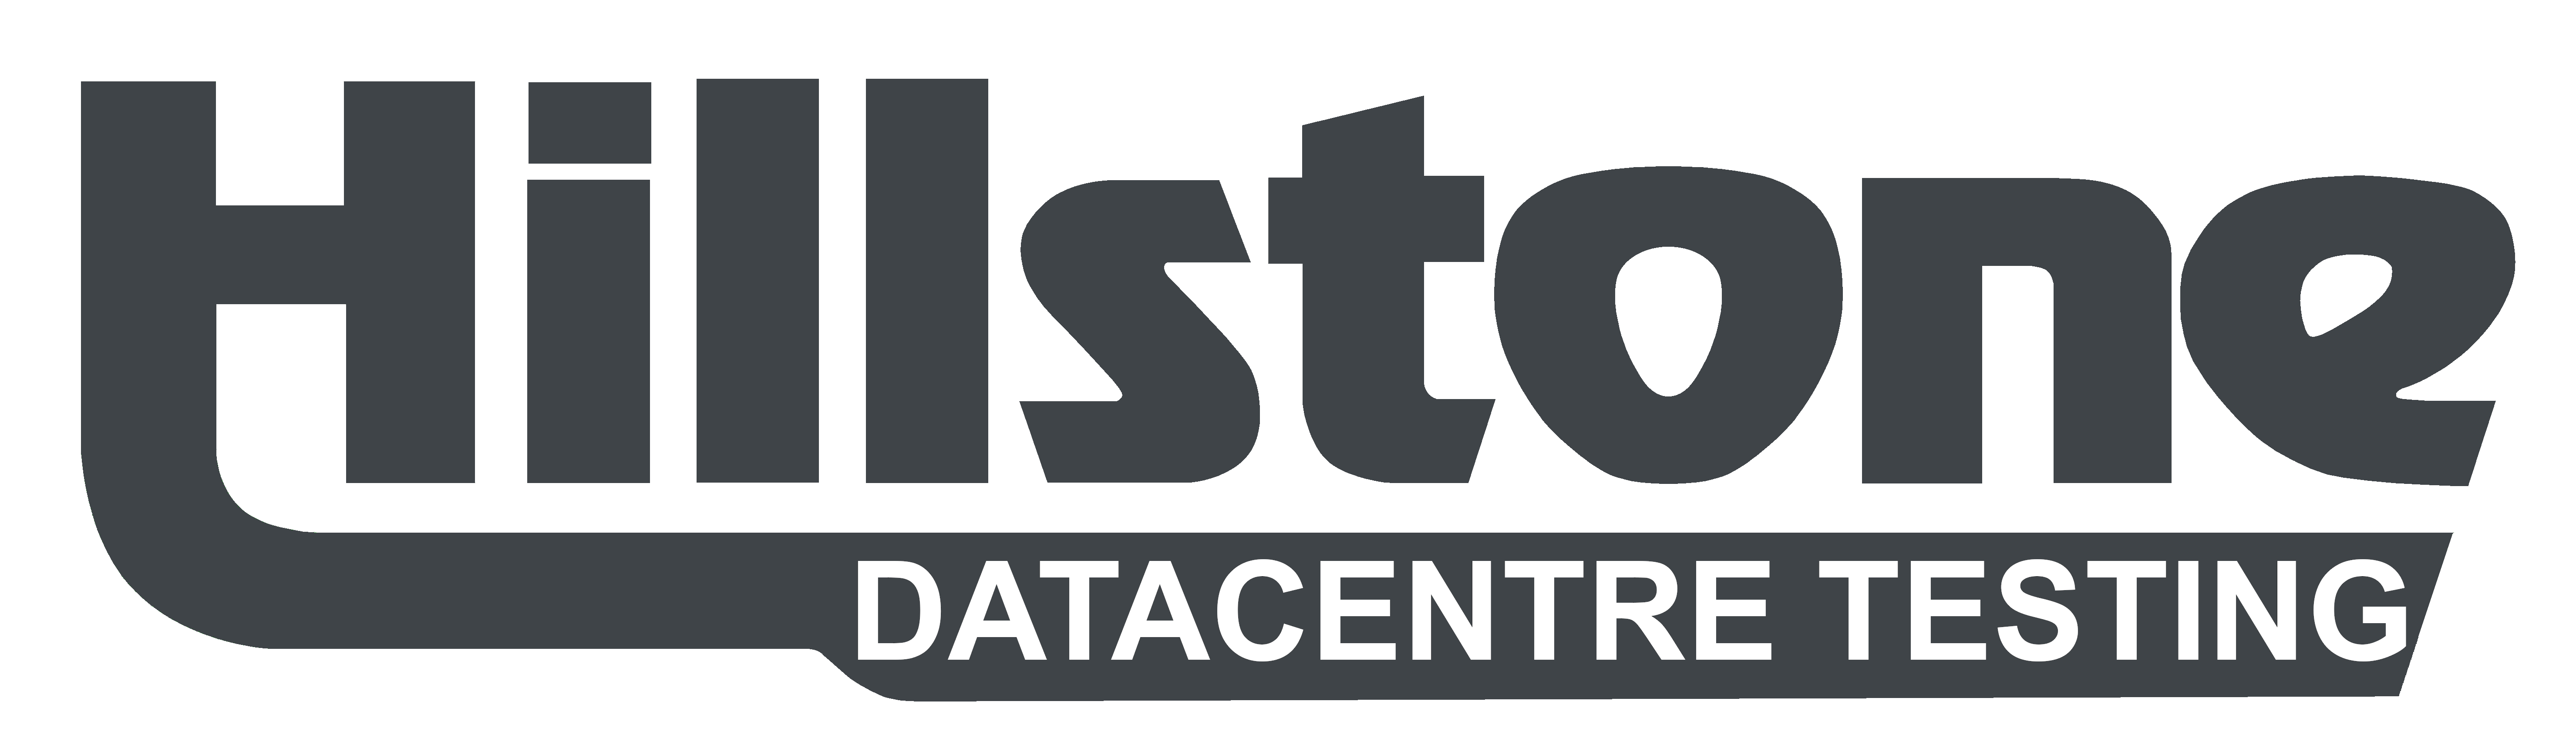 Hillstone Logo Datacentre Testing